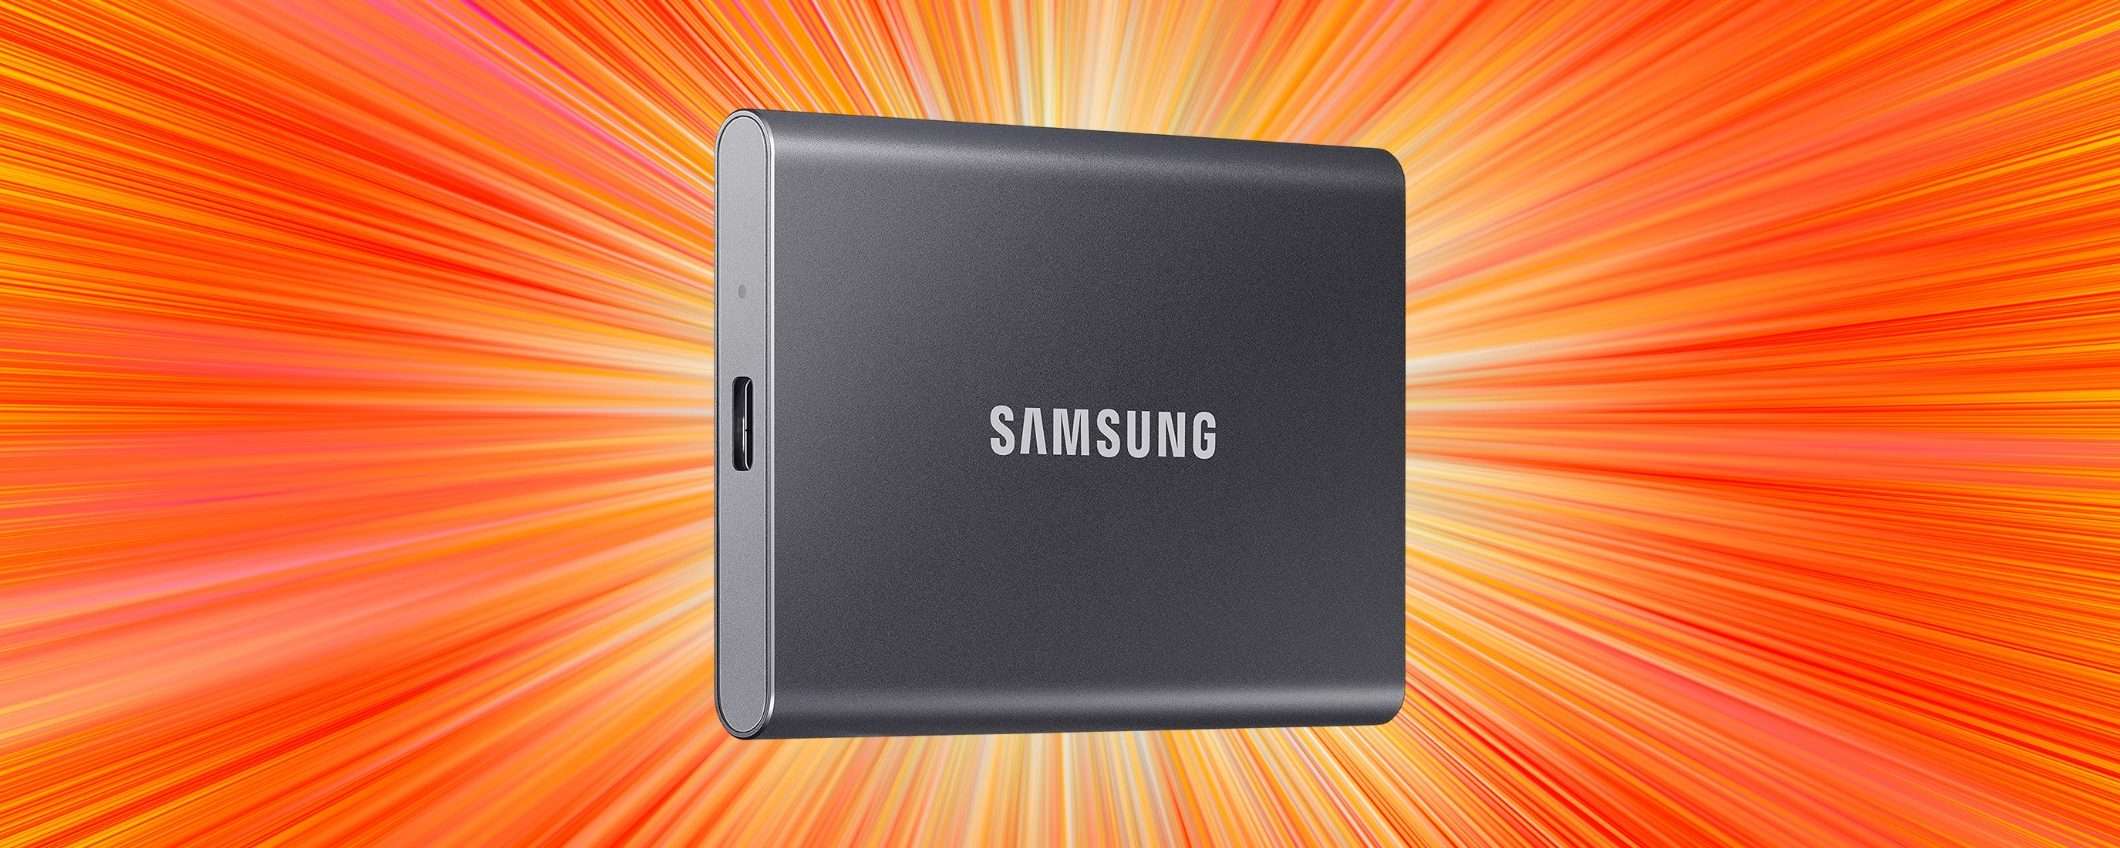 SSD Samsung, qualità e velocità assicurate: 1 TB da amare (-60%)